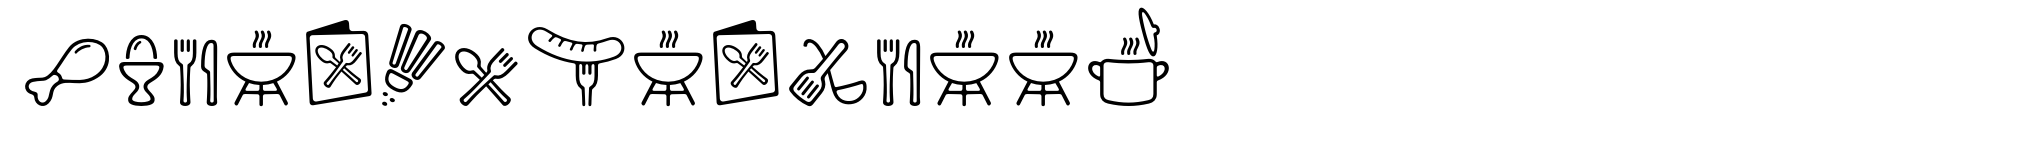 PH Font Icons Food image